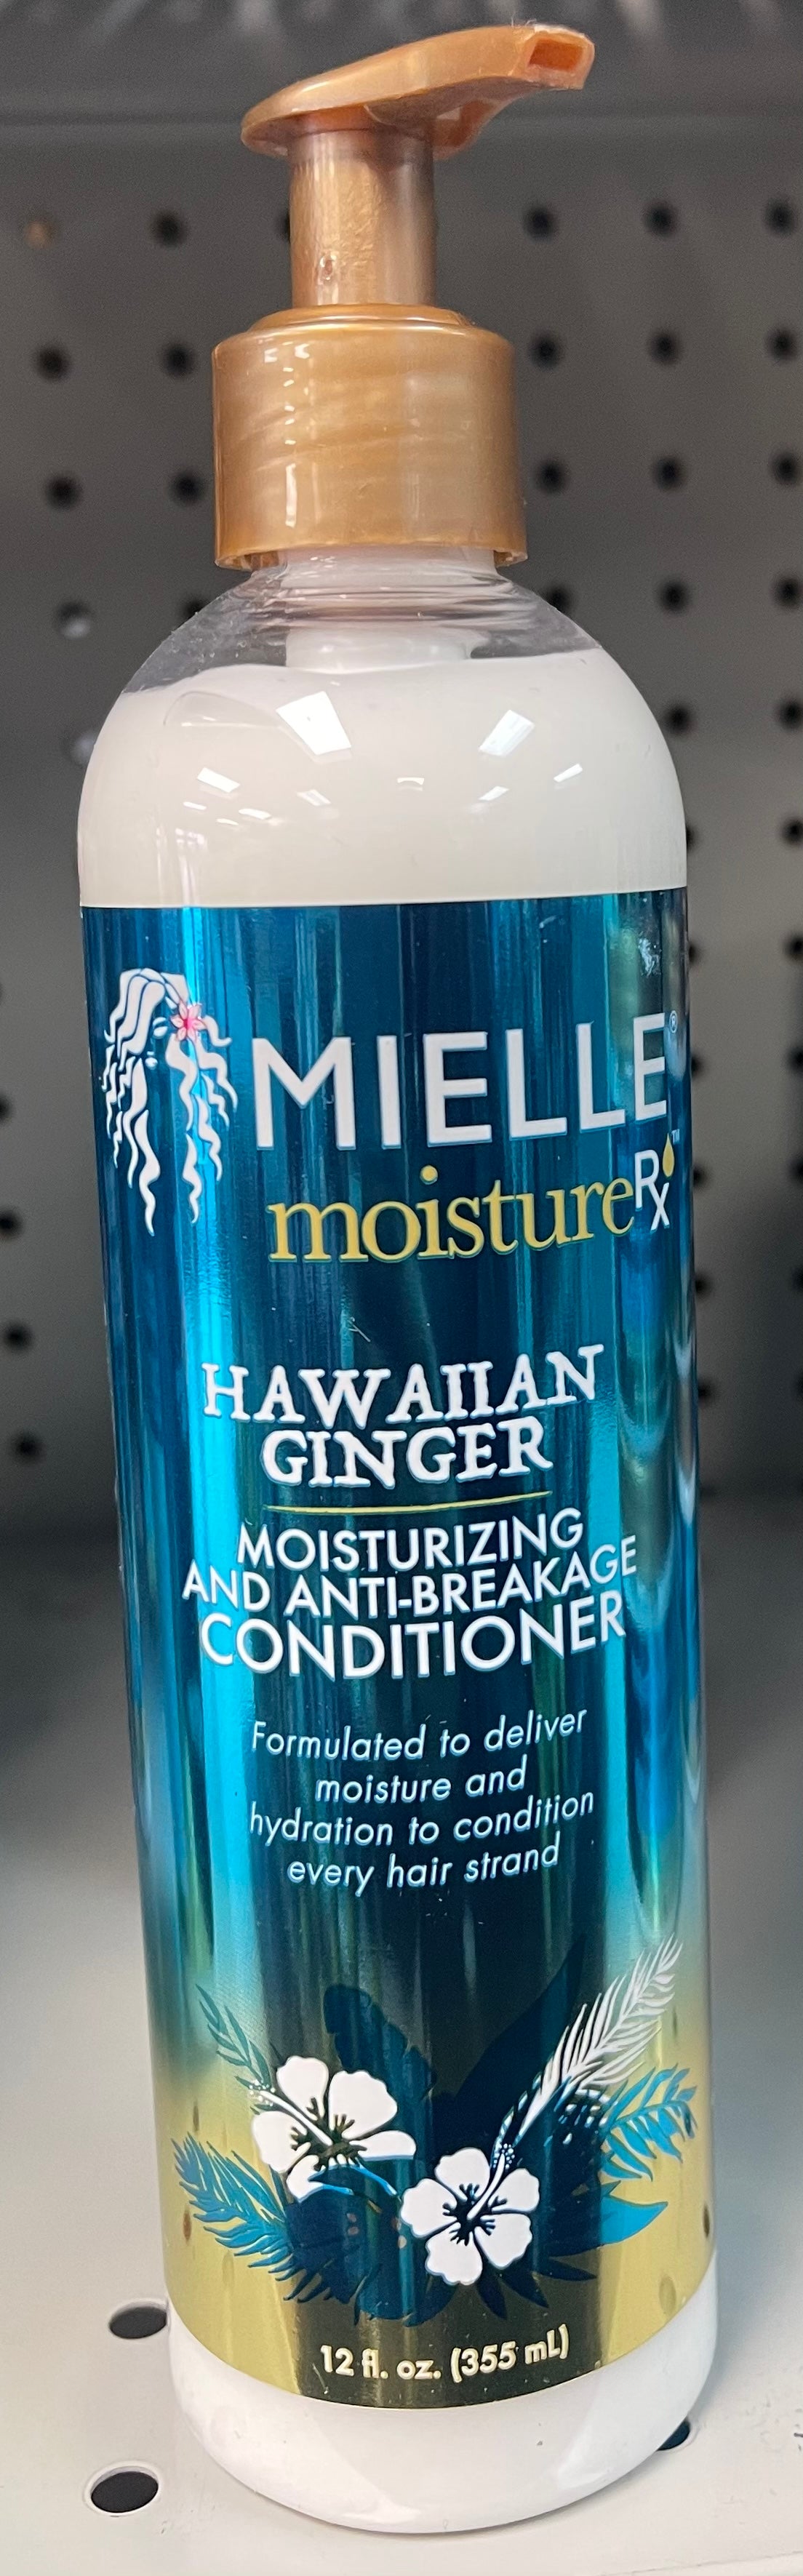 Mielle Hawaiian Ginger Moisturizing And Anti-Breakage Conditioner